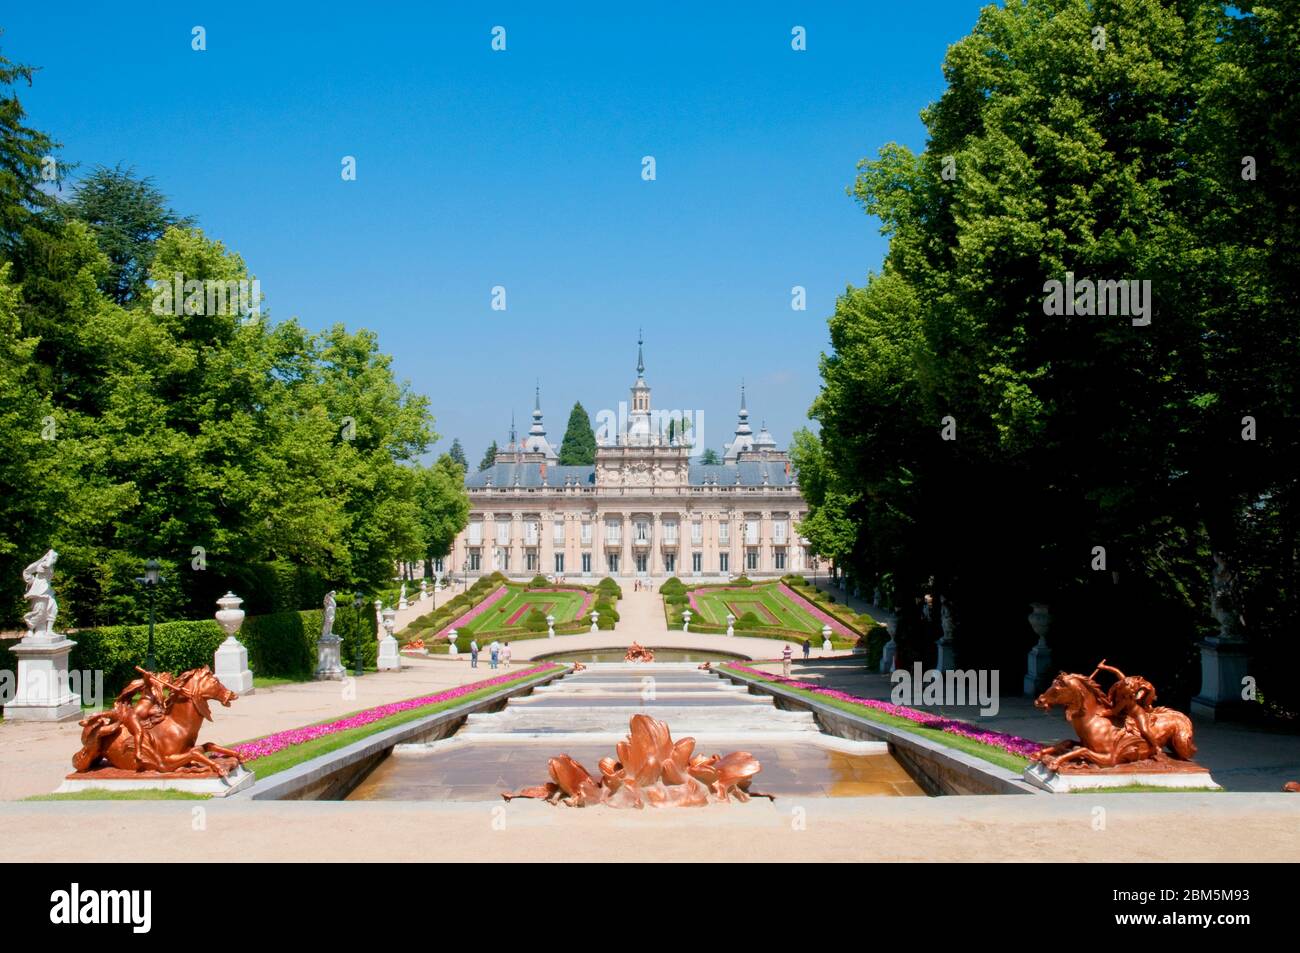 Royal Palace and gardens. La Granja de San ildefonso, Segovia province, Castilla Leon, Spain. Stock Photo